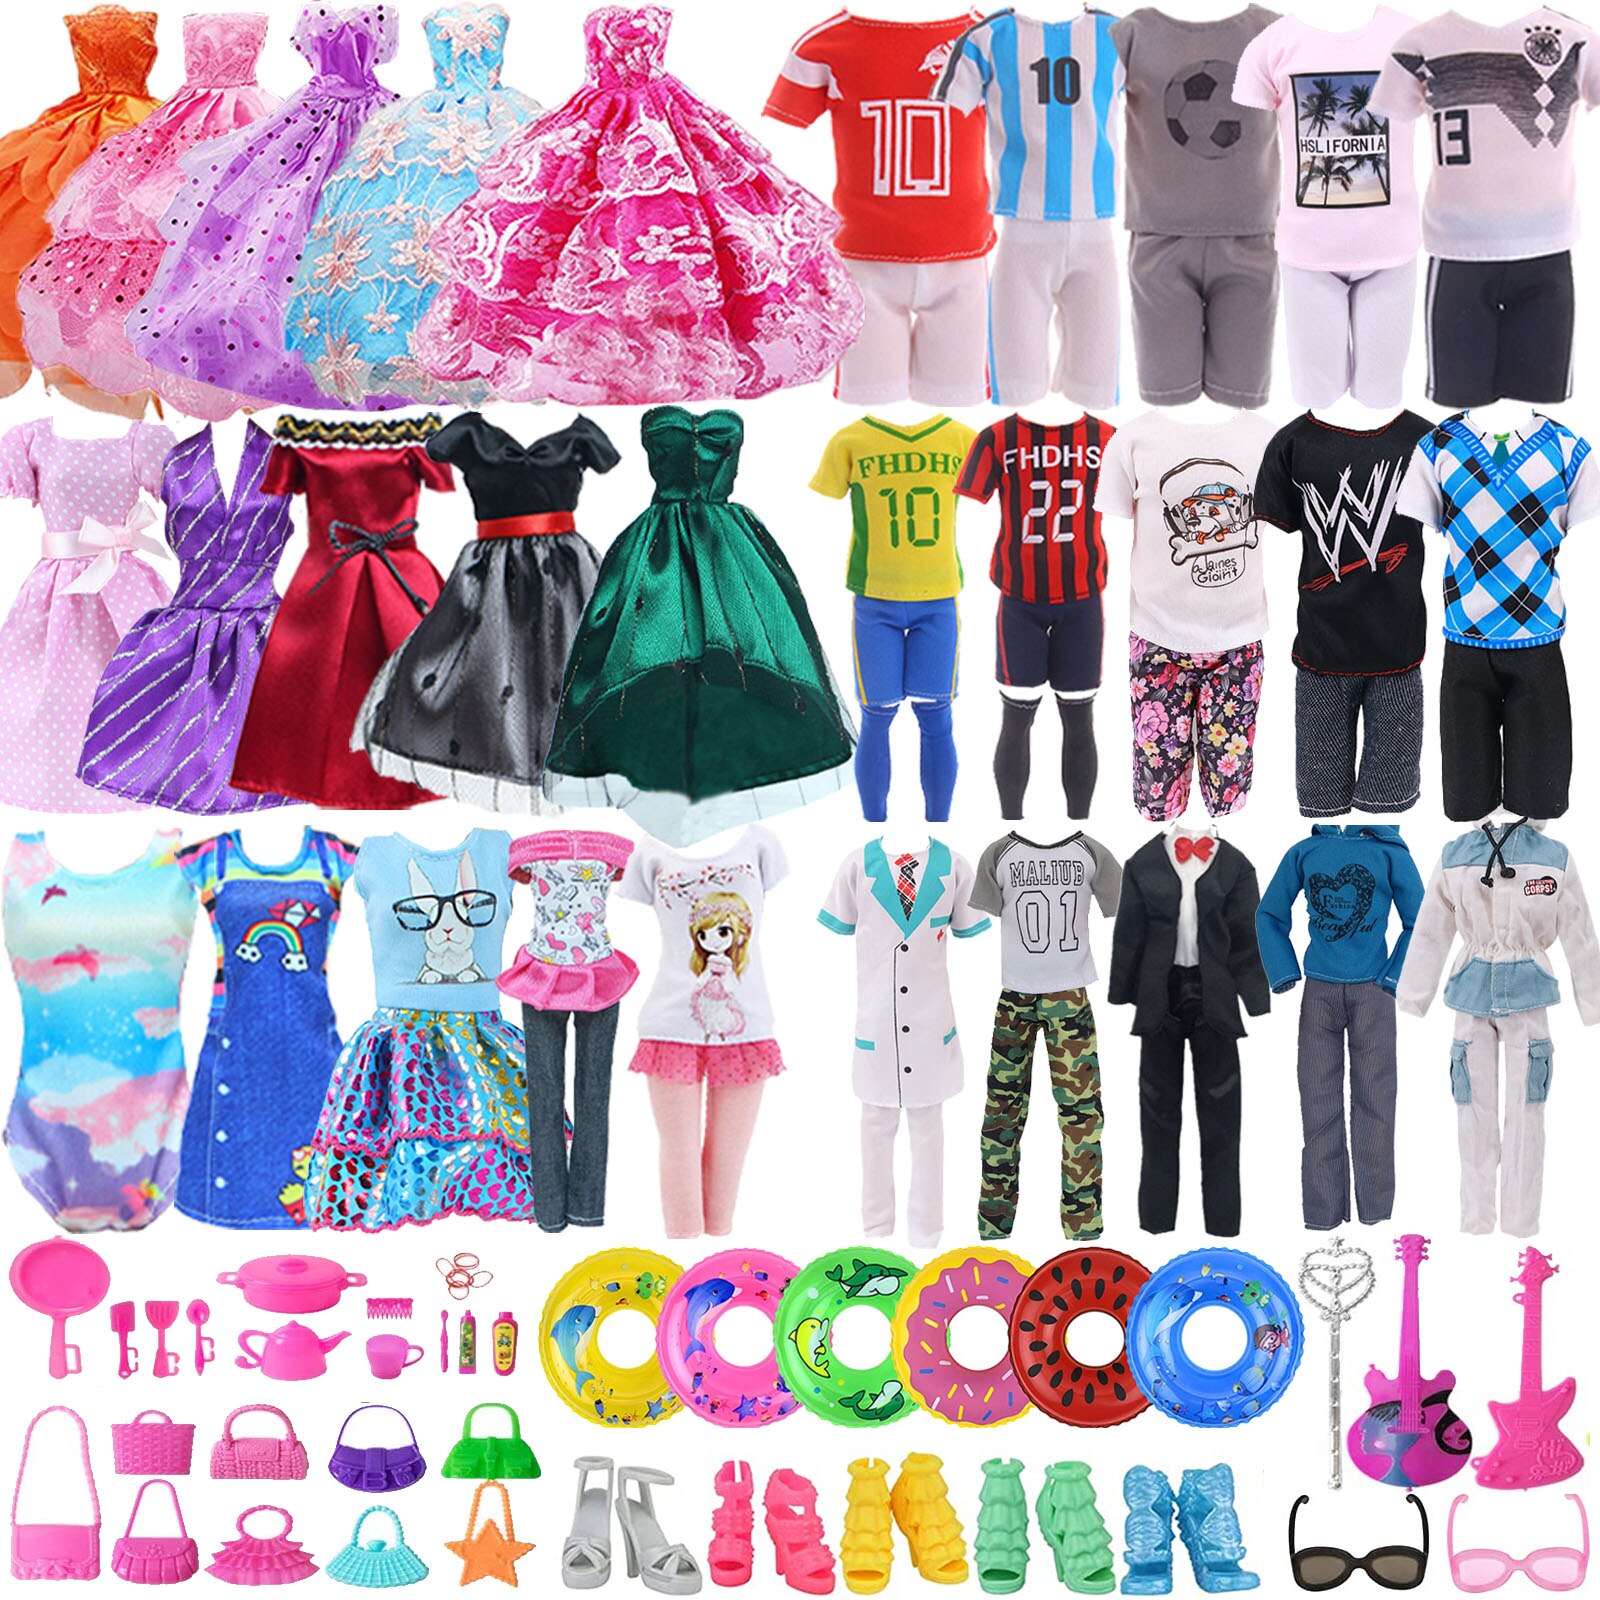 79Pcs Barbies Ken Doll Accessories 5 Barbies Clothes+5 Ken Clothes+ 69